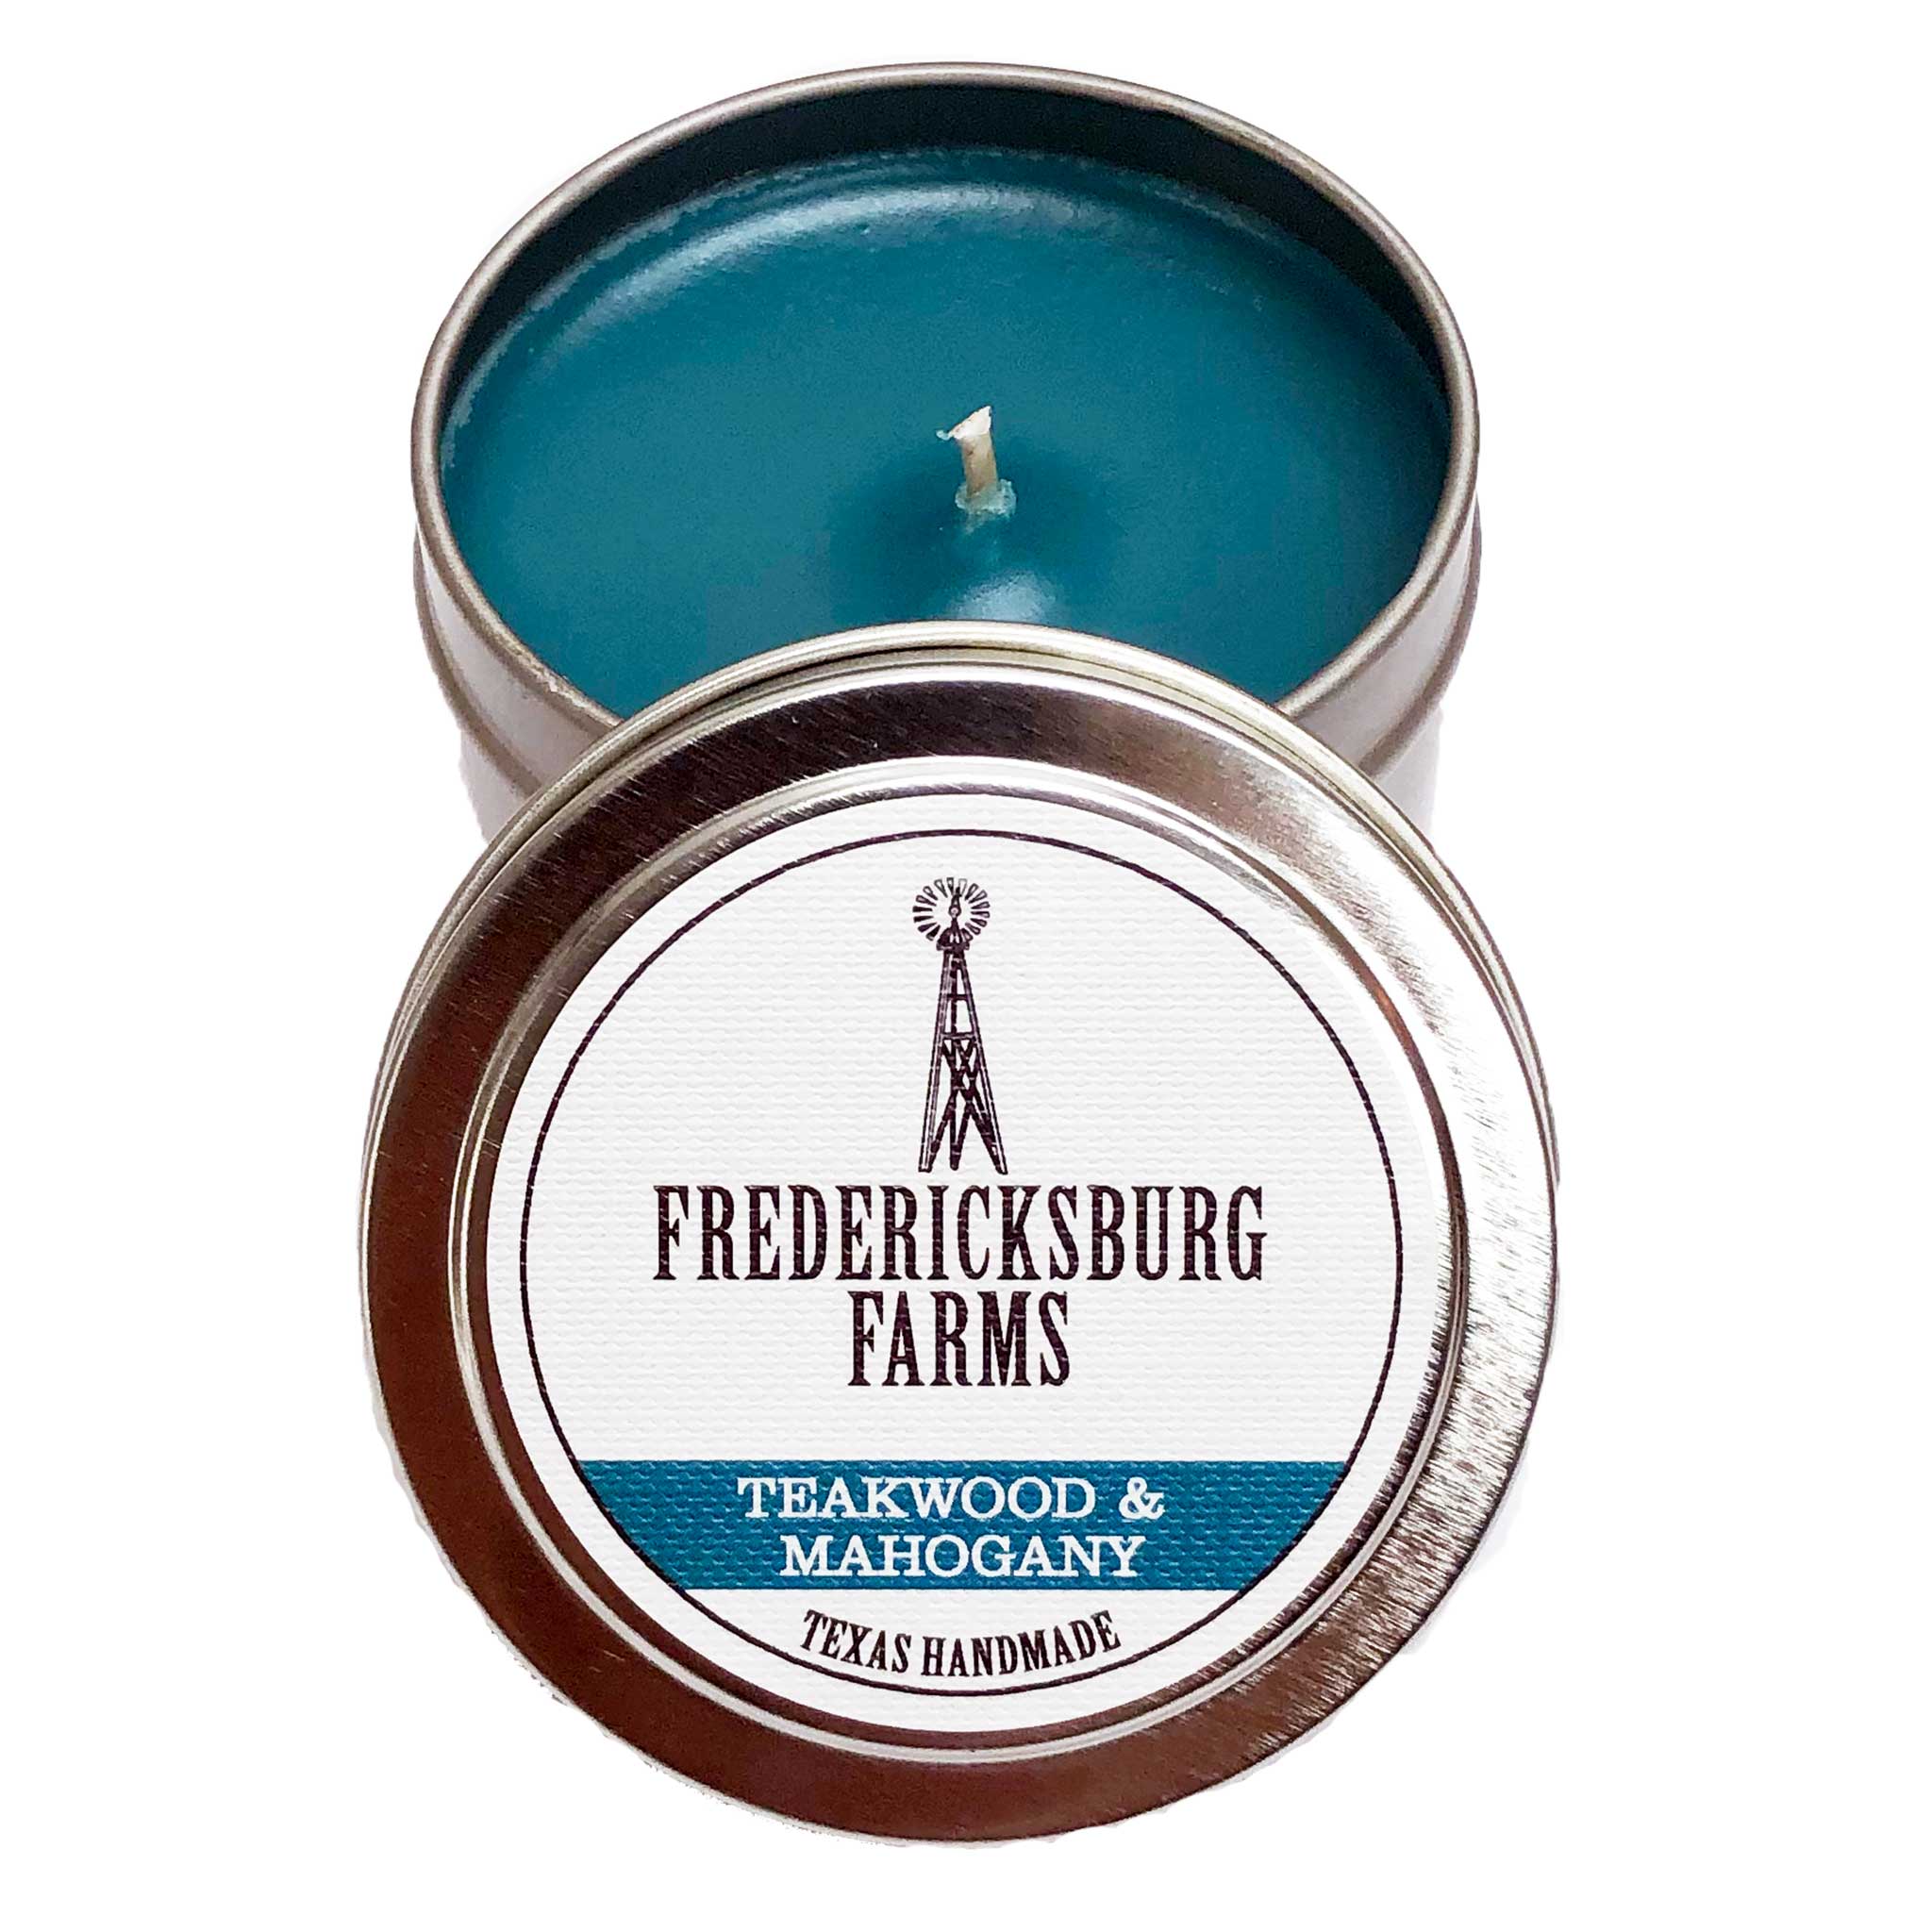 NEW! Teakwood & Mahogany Candle Travel Tin - Fredericksburg Farms